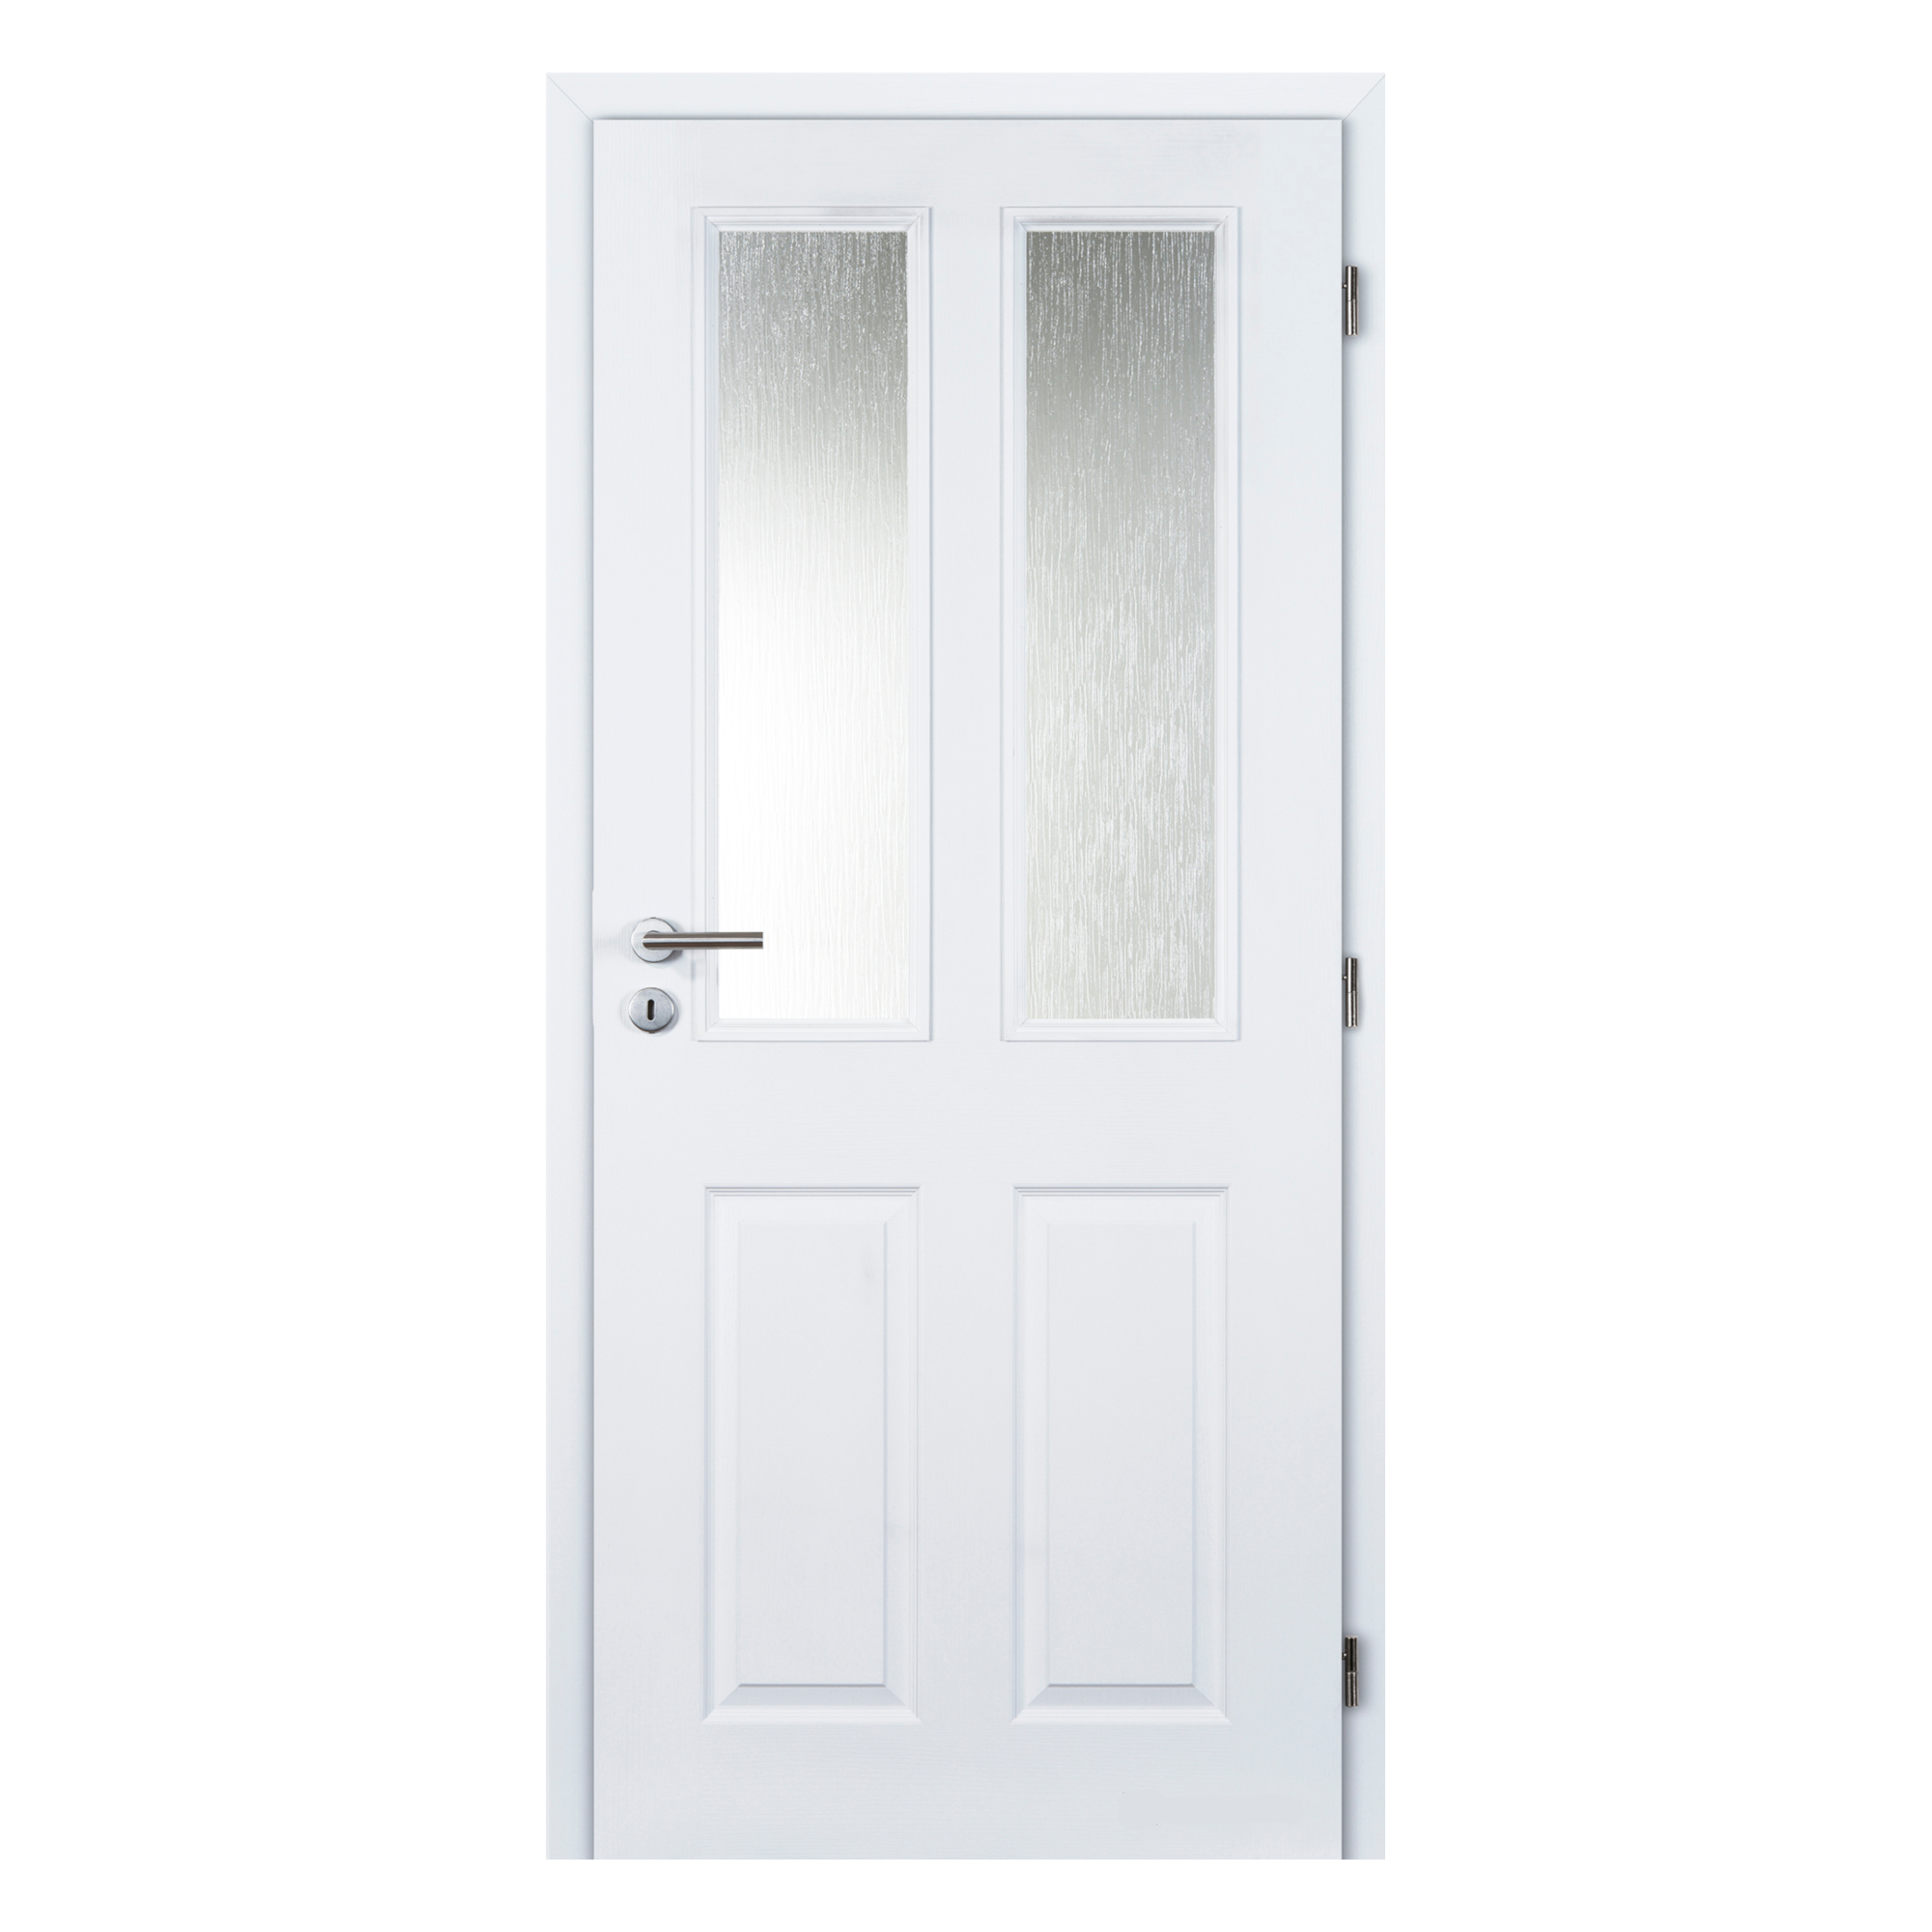 Dveře prosklené profilované Doornite ACHILLES pravé 700 mm bílé Masonite